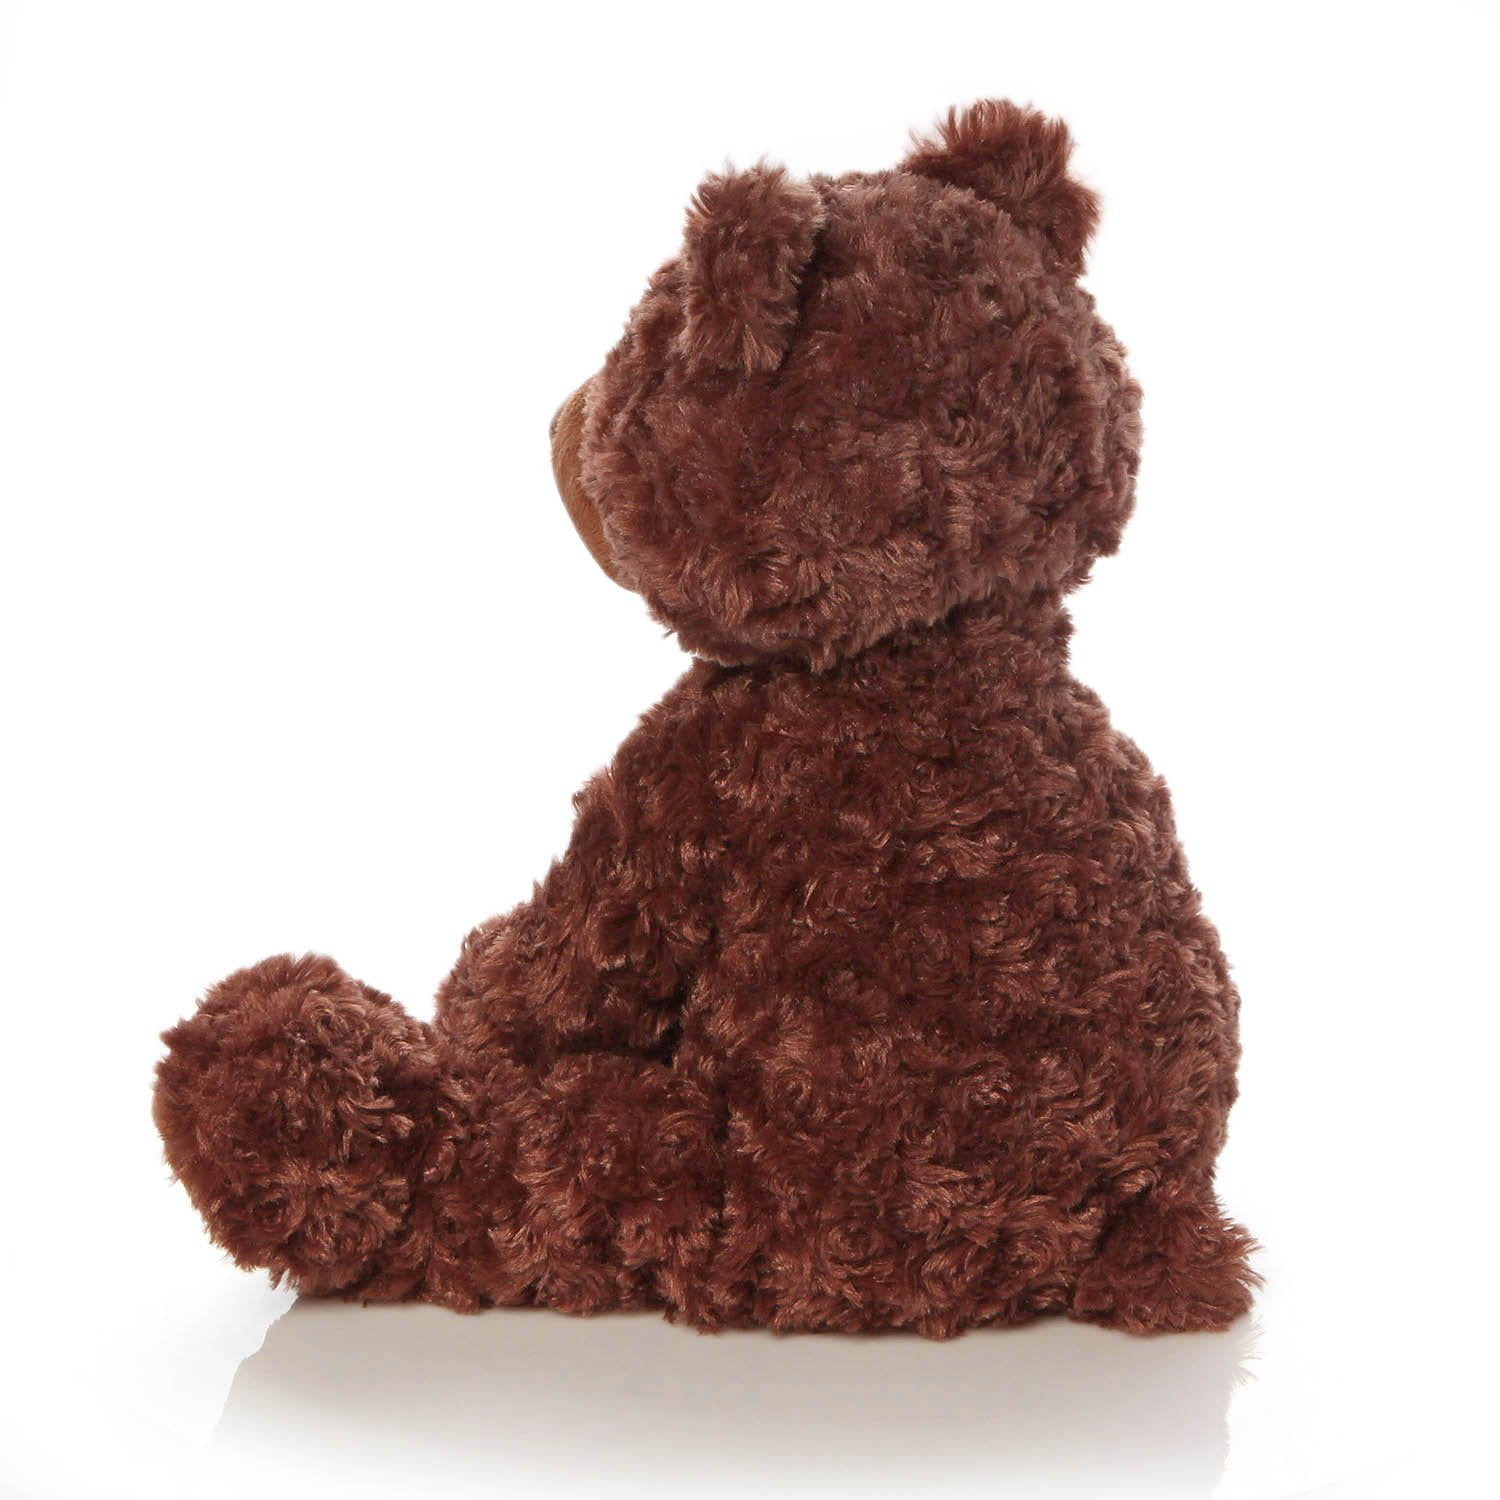 18" GUND Philbin Teddy Bear Stuffed Animal Plush Chocolate Brown